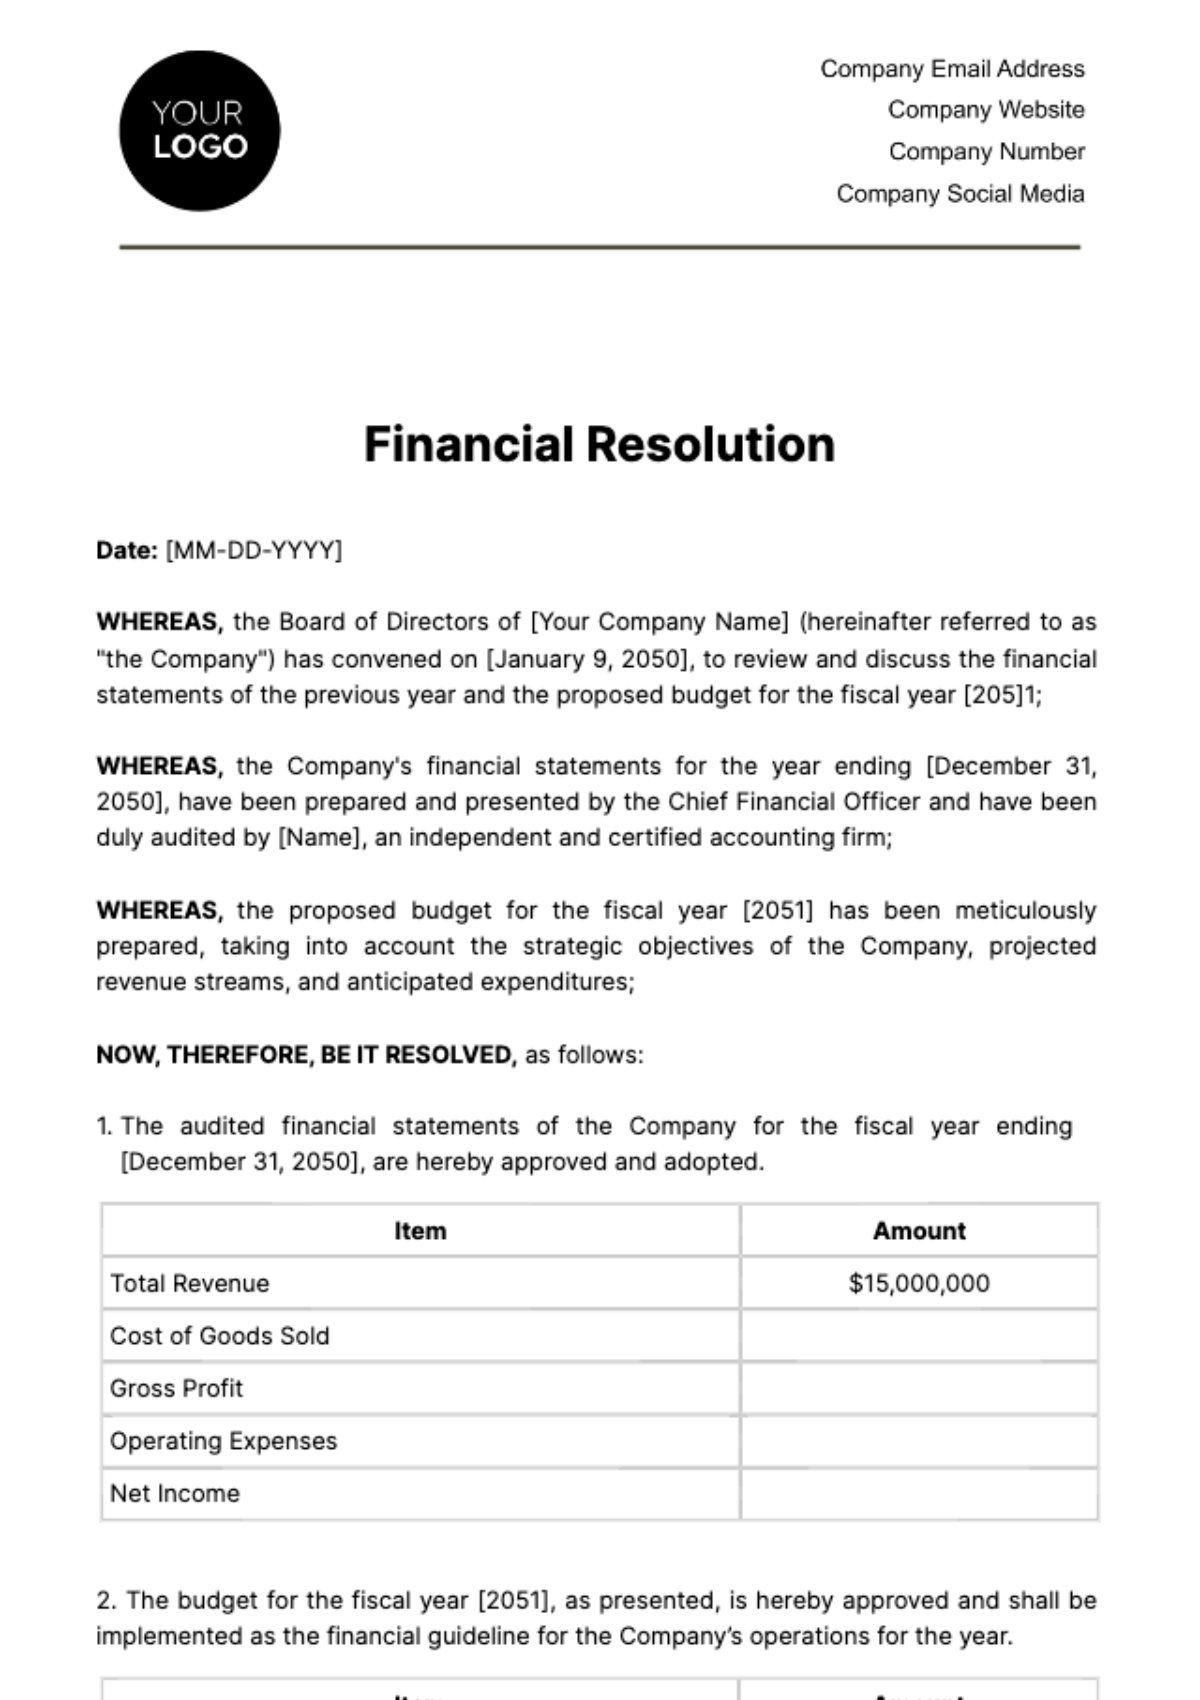 Financial Resolution Template